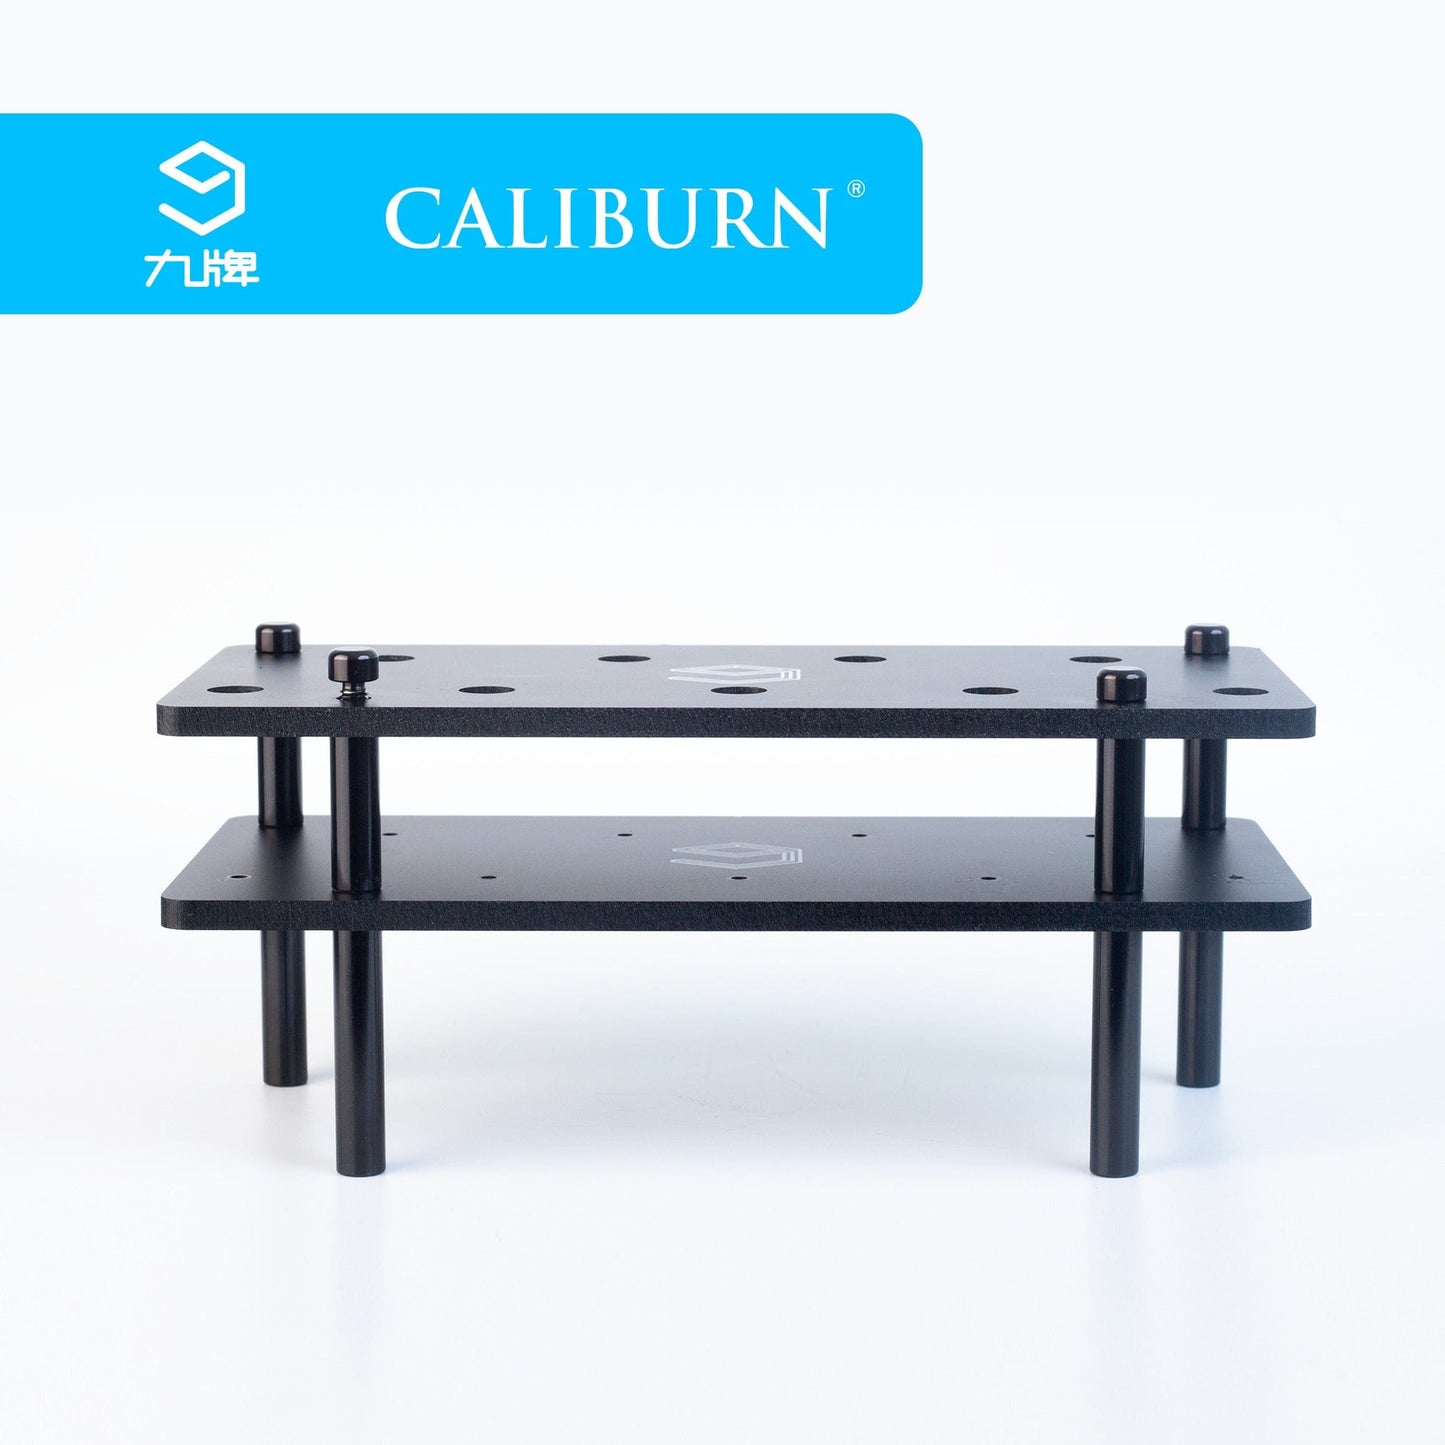 Caliburn Acrylic Darts Display Stand - Holds 3 Sets